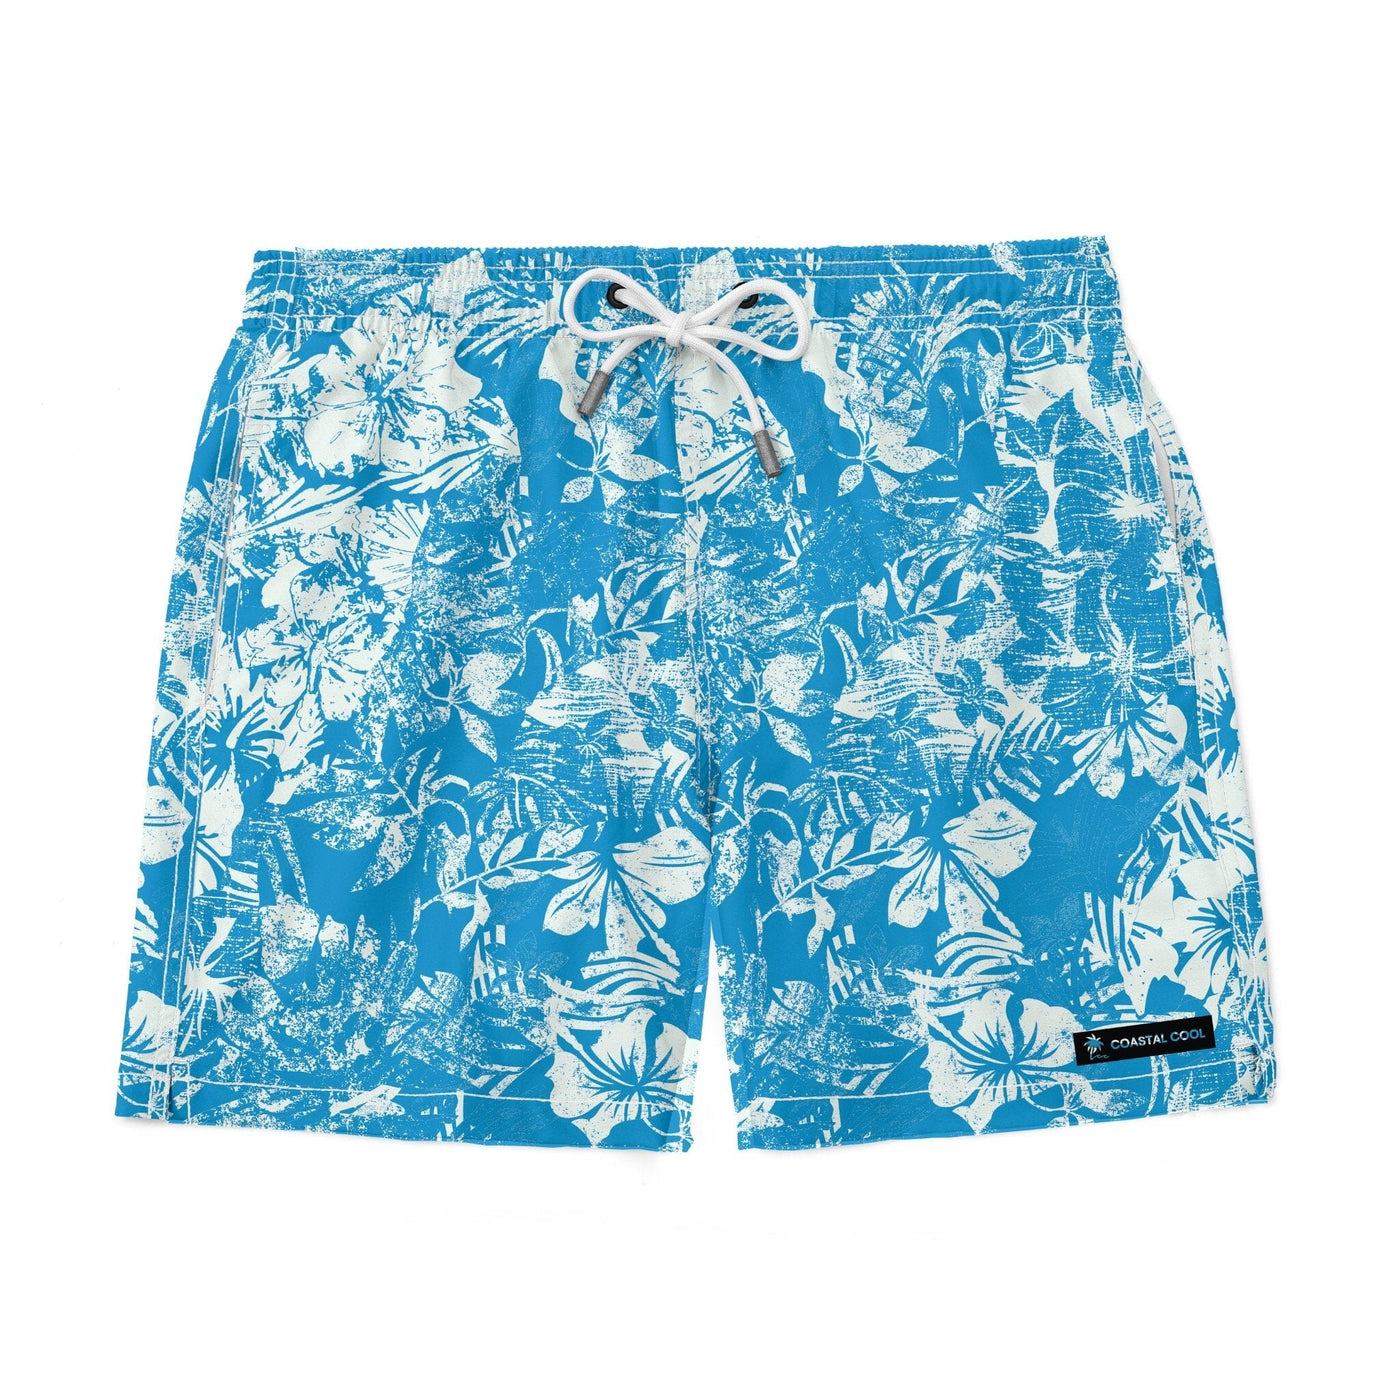 Hawaiian Cruisin Aqua Swim Trunks - Coastal Cool - Swimwear and Beachwear - Recycled fabrics